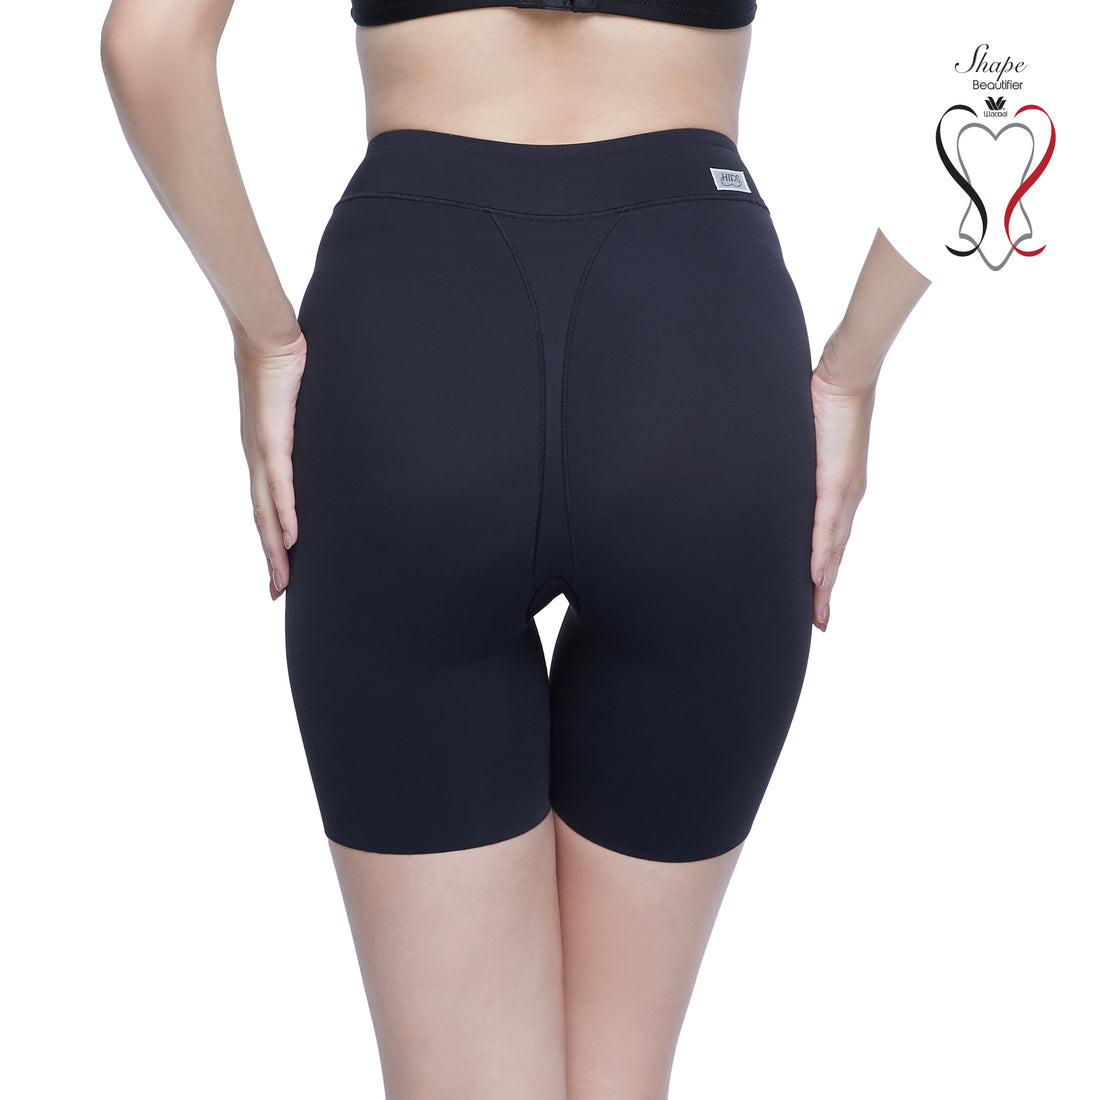 Wacoal Shape Beautifier Hip Tight Pants Model WY1182 Black (BL)